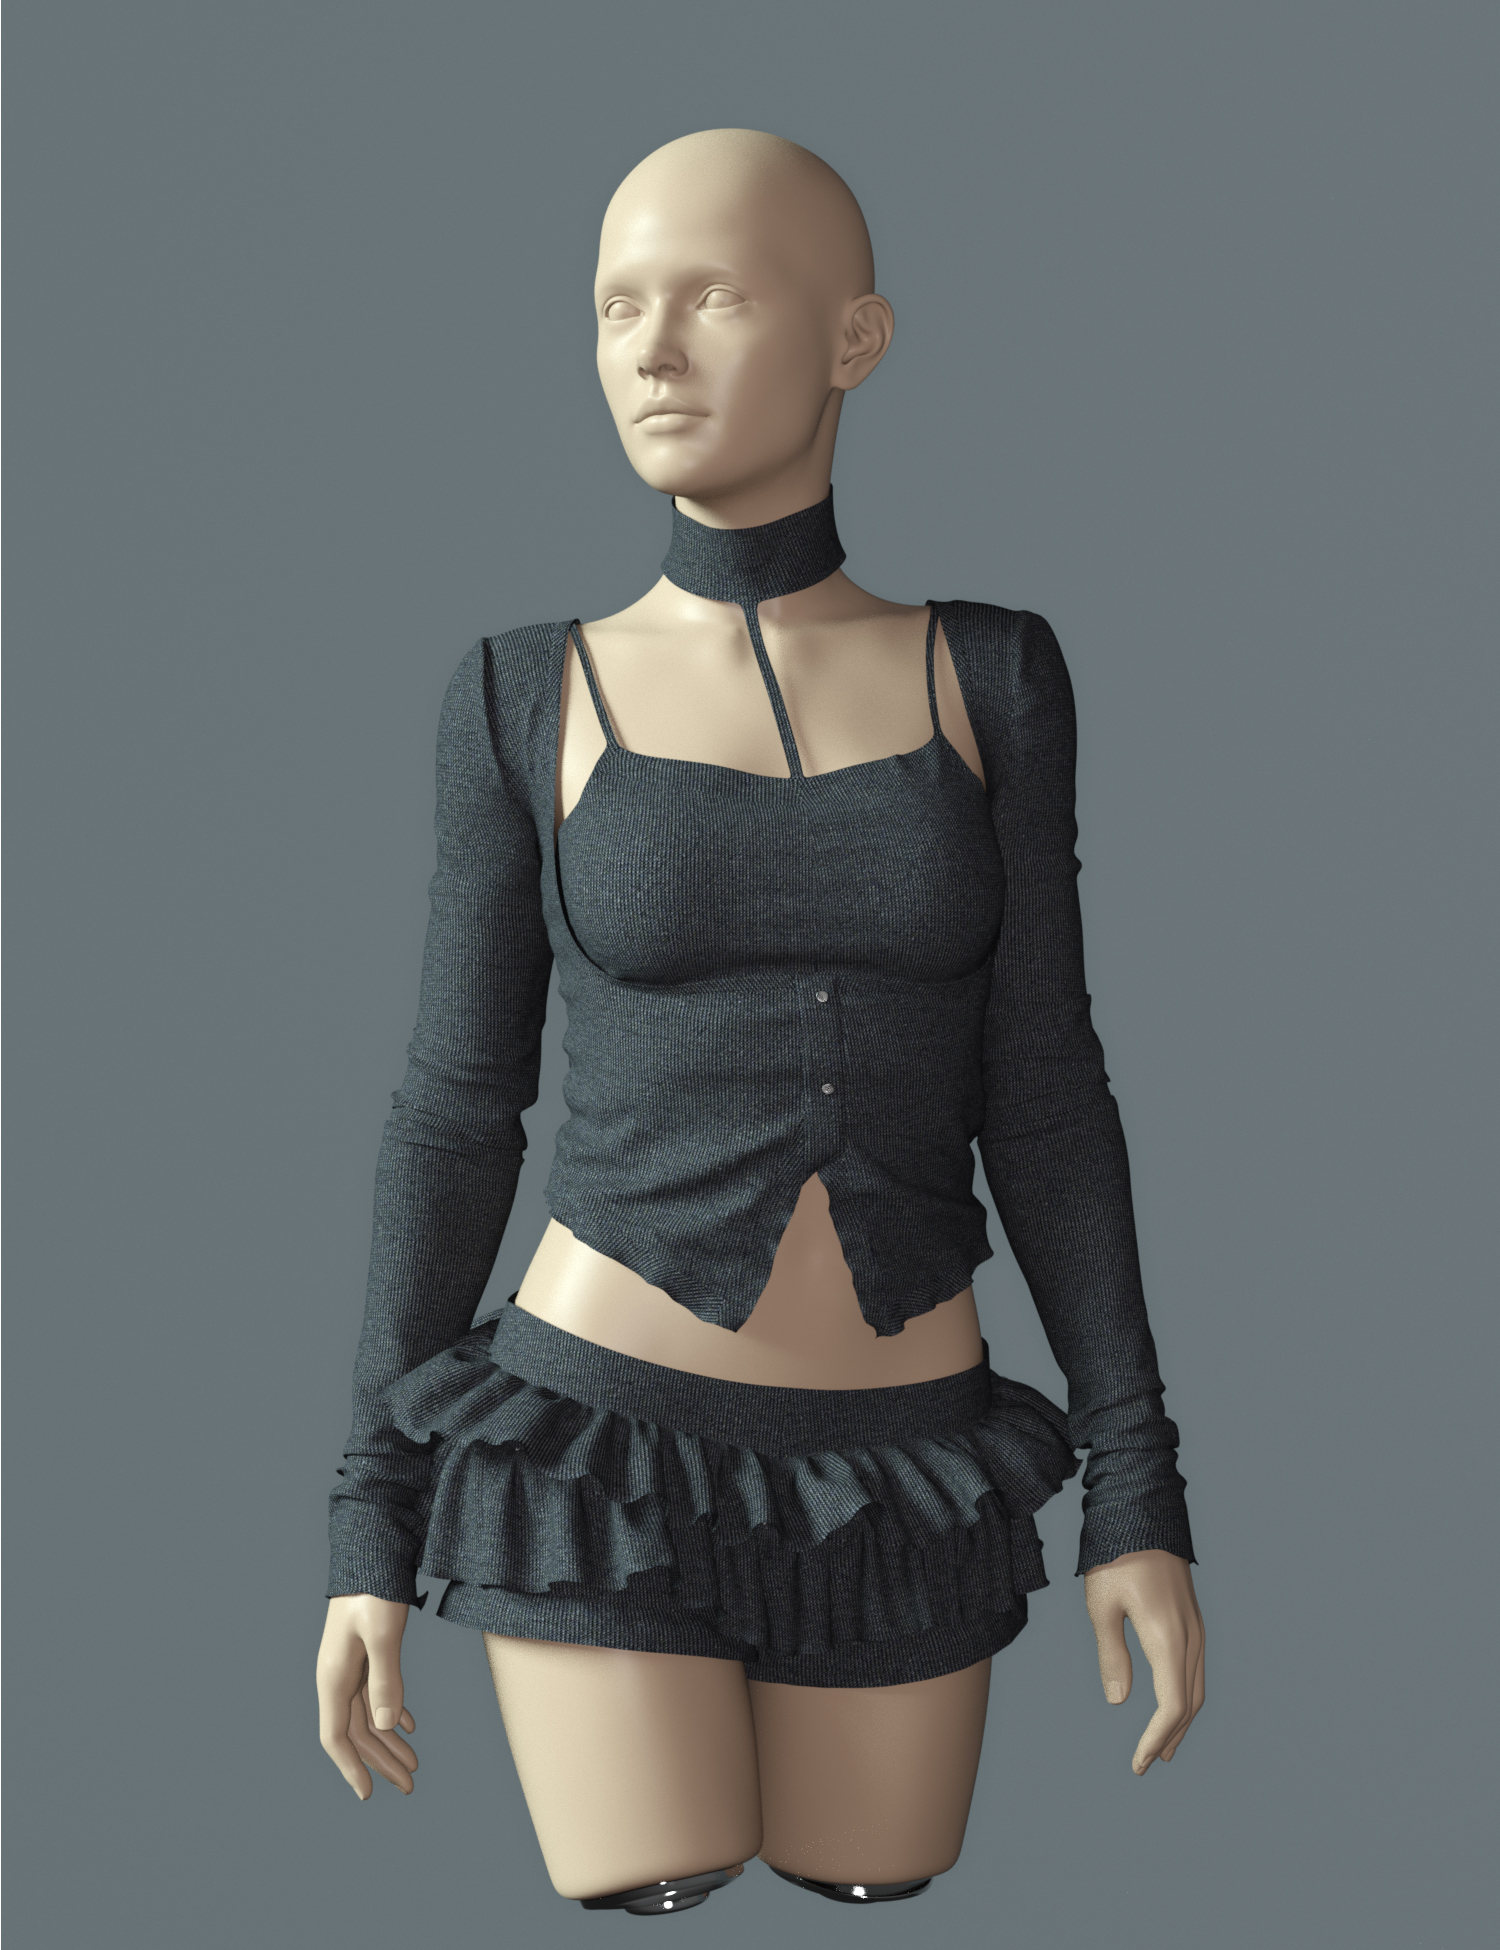 dForce Summer Knitwear Suit for Genesis 9 by: Sprite, 3D Models by Daz 3D